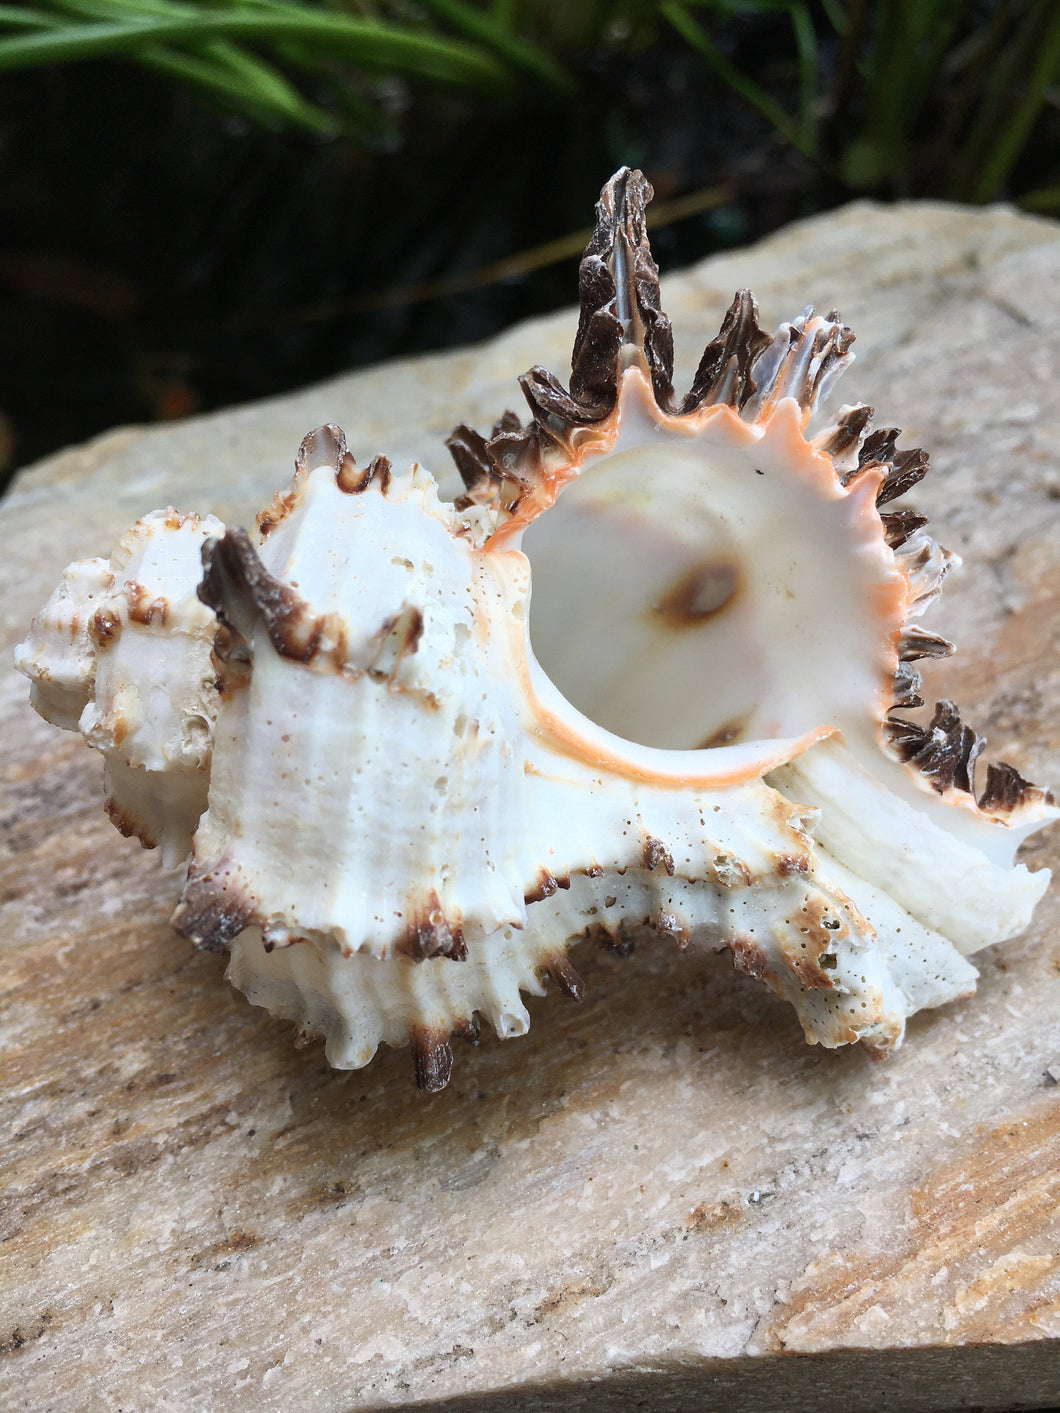 Murex Endiva Long Spine Shell - Seashell - Murex - Sea Shell Crafting - Beach Wedding Decor - Large Shell - Collector Shells - FREE SHIPPING